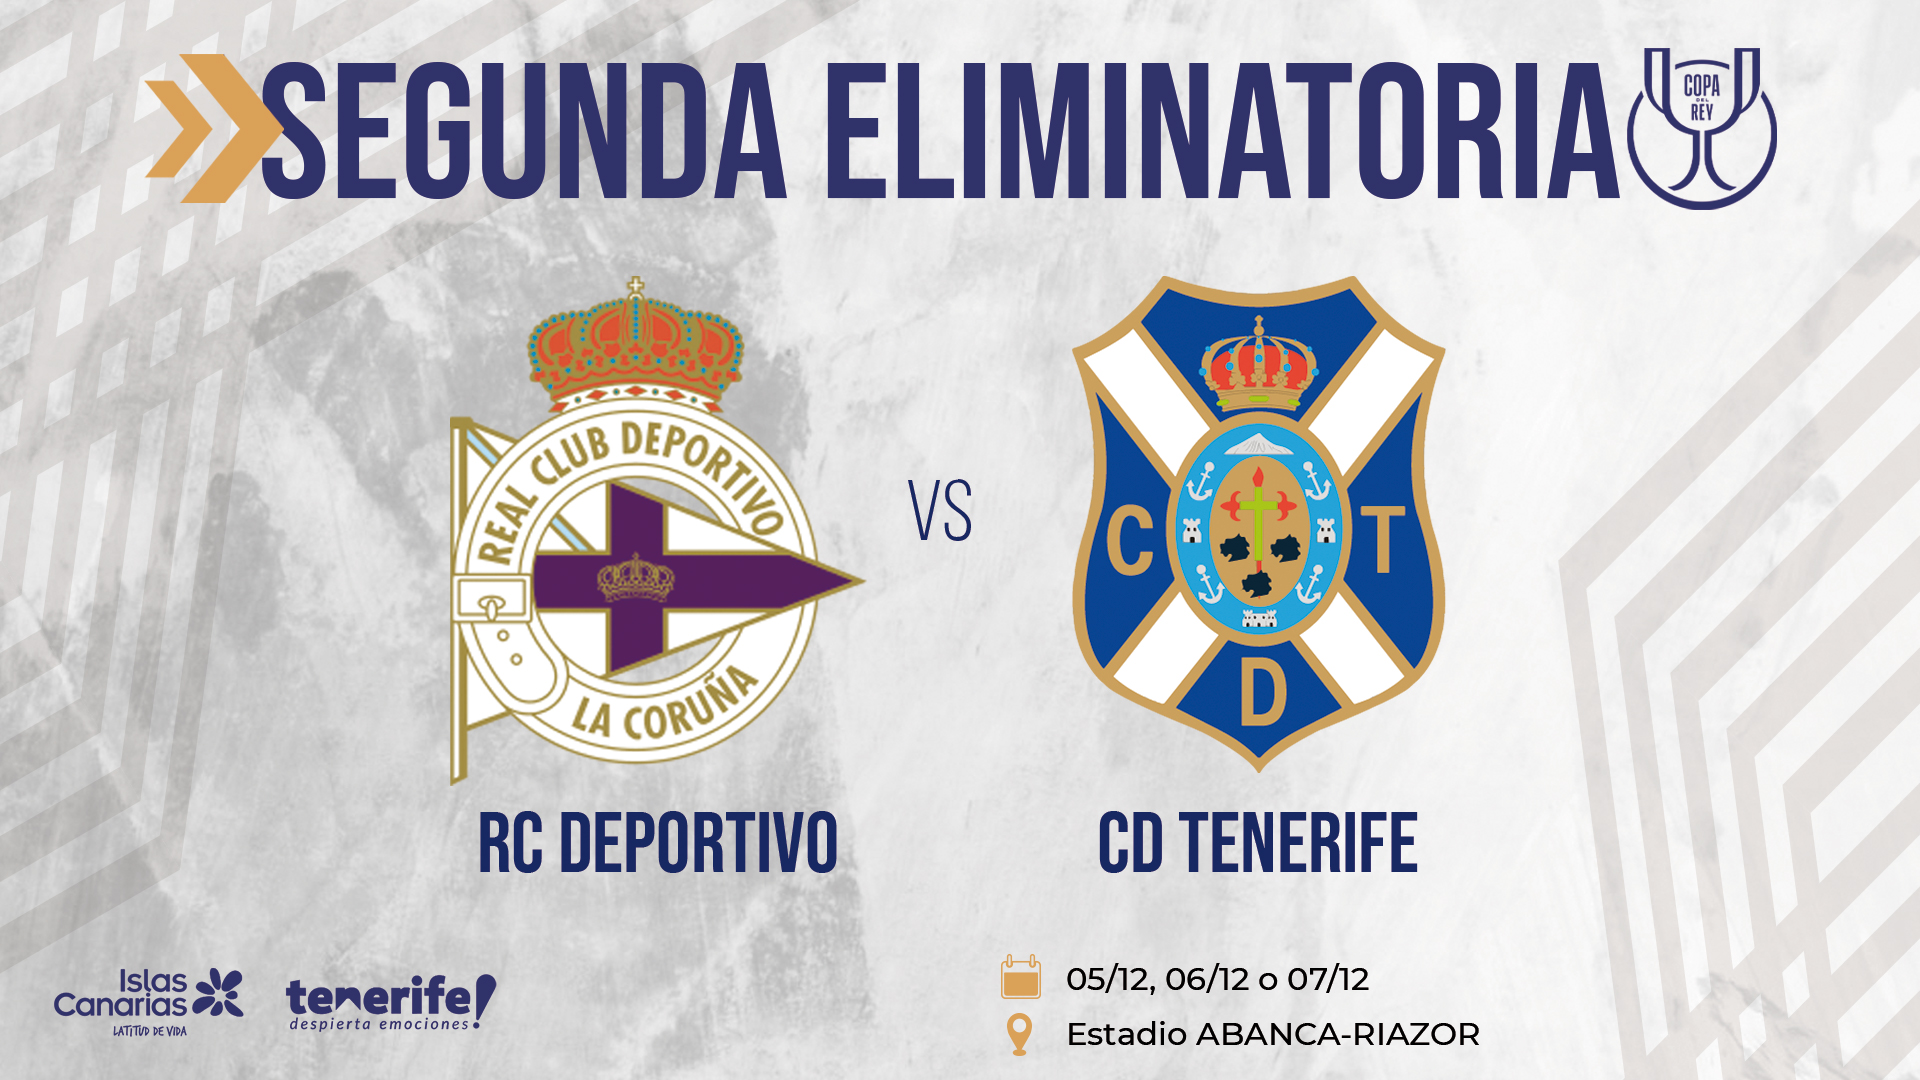 El histórico RC Deportivo, rival del CD Tenerife en la 2ª ronda copera